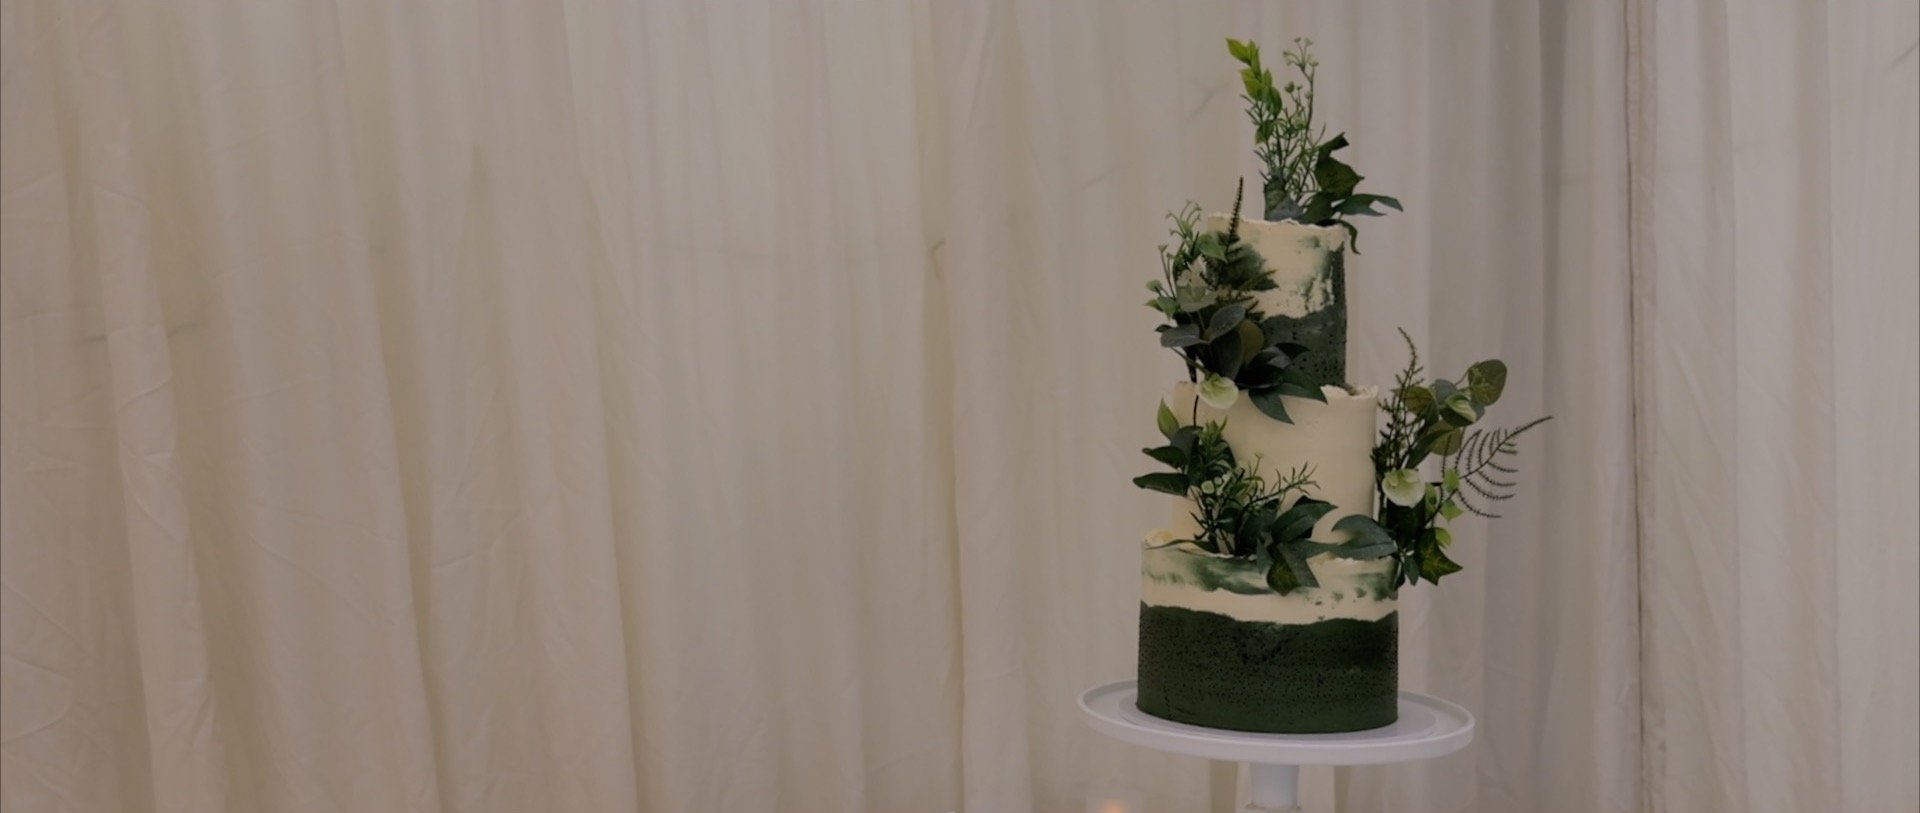 The Wedding Cake video - 3 Cheers Media.jpg